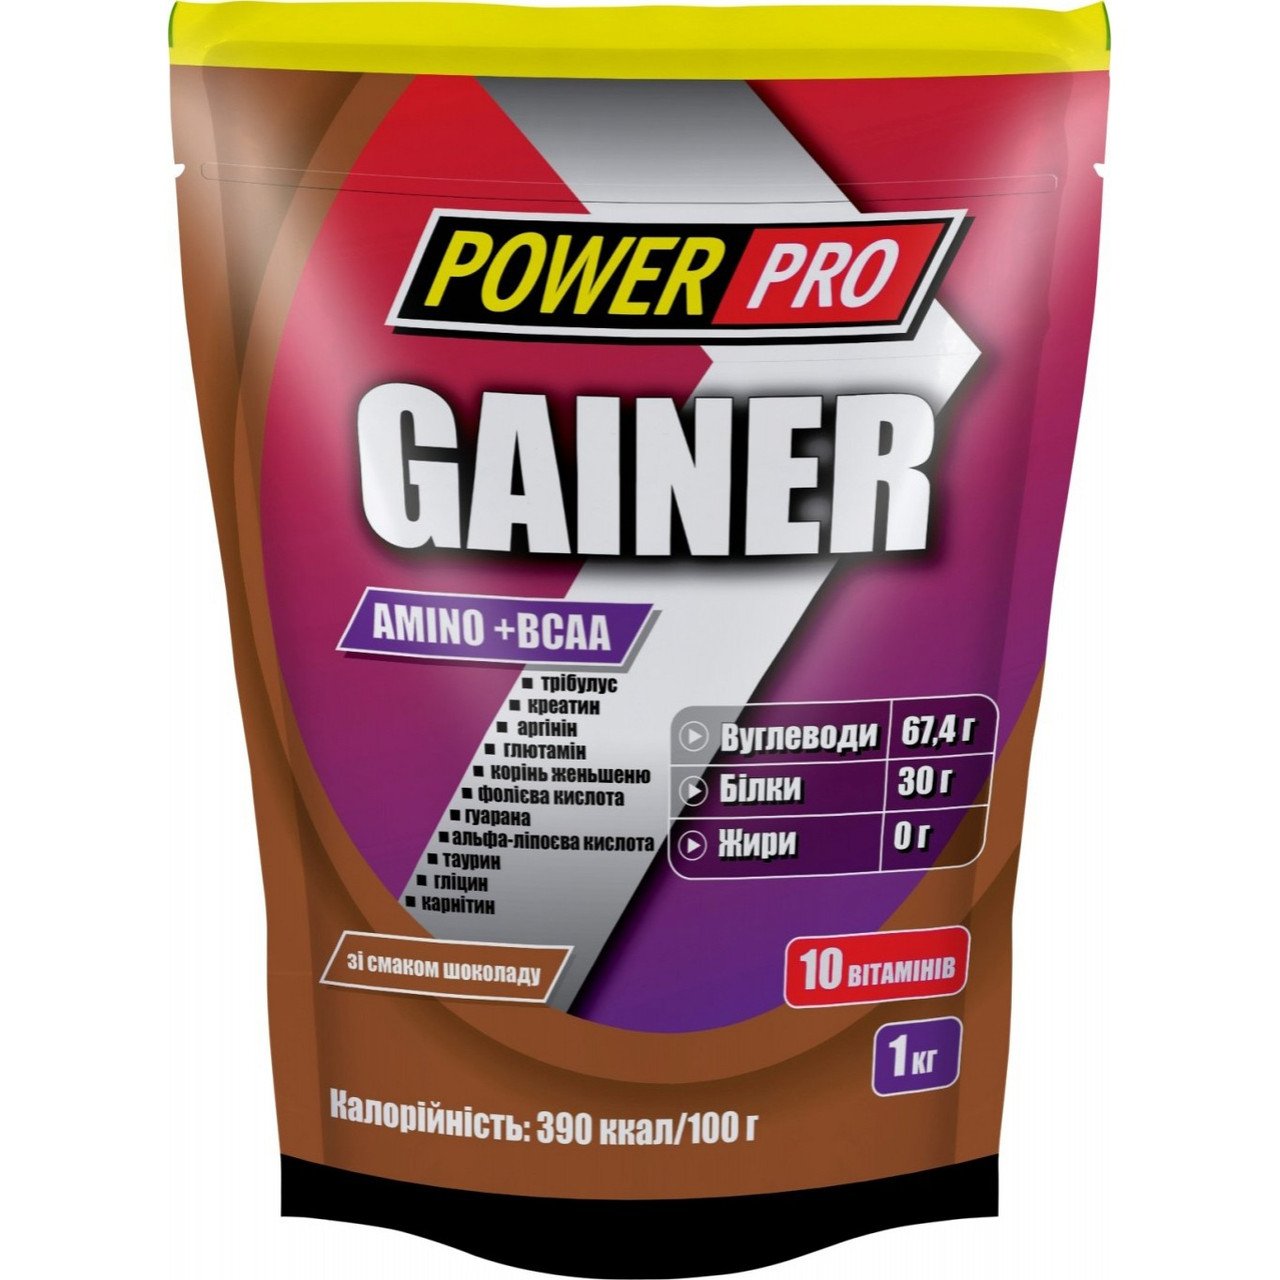 Power Pro Гейнер для набора массы Power Pro Gainer (1 кг) павер про Банан, , 